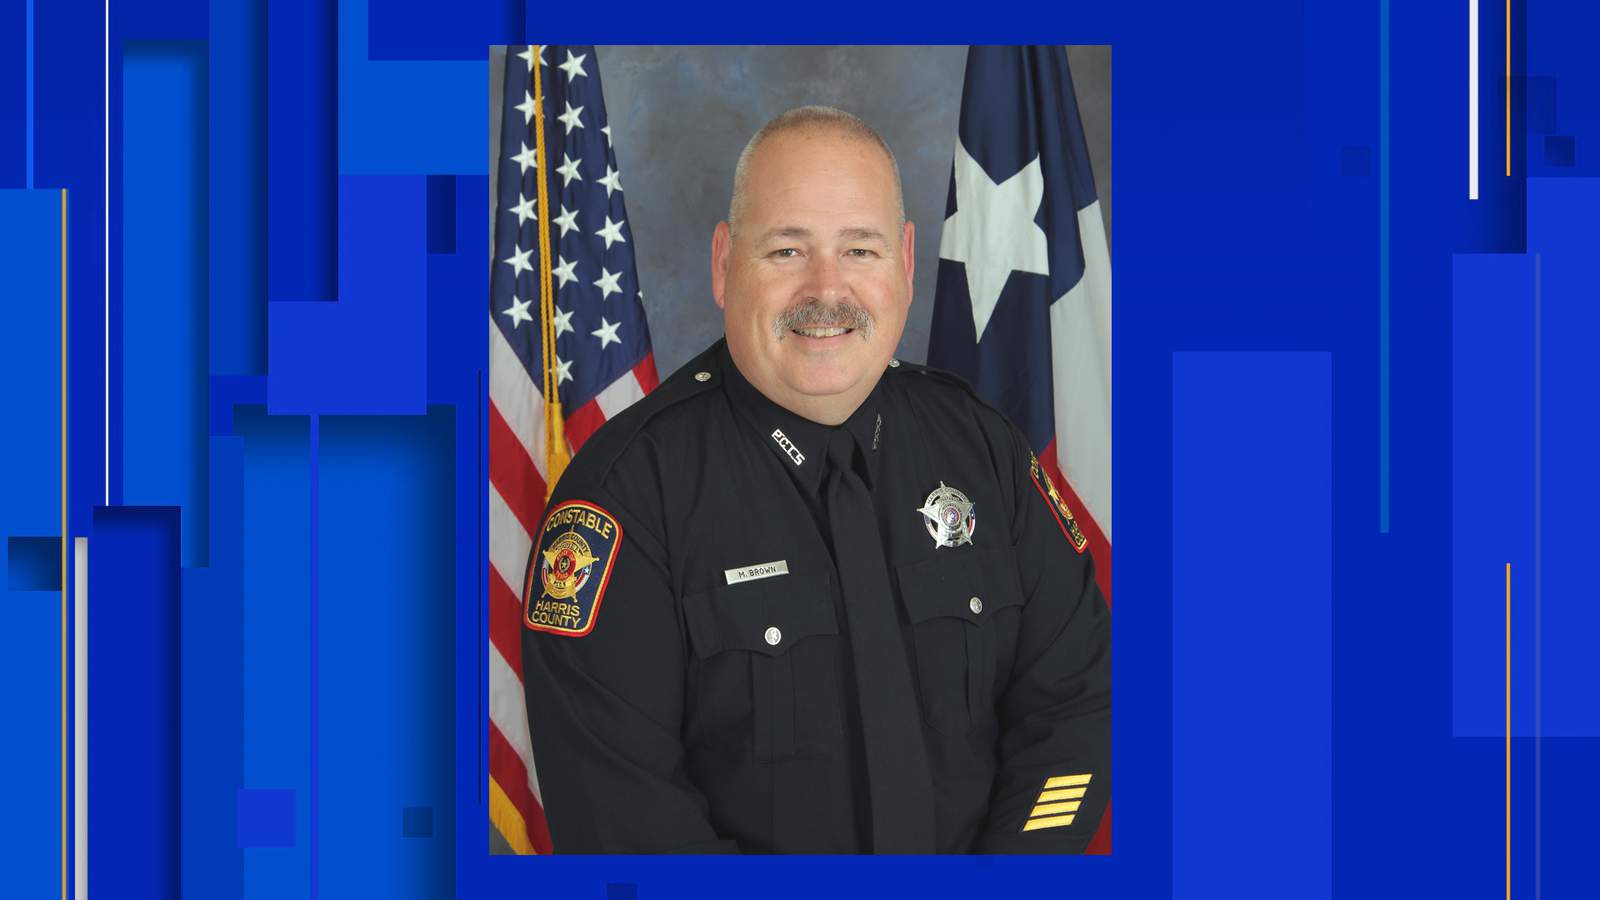 Harris County Precinct 5 deputy loses battle against COVID-19, officials say